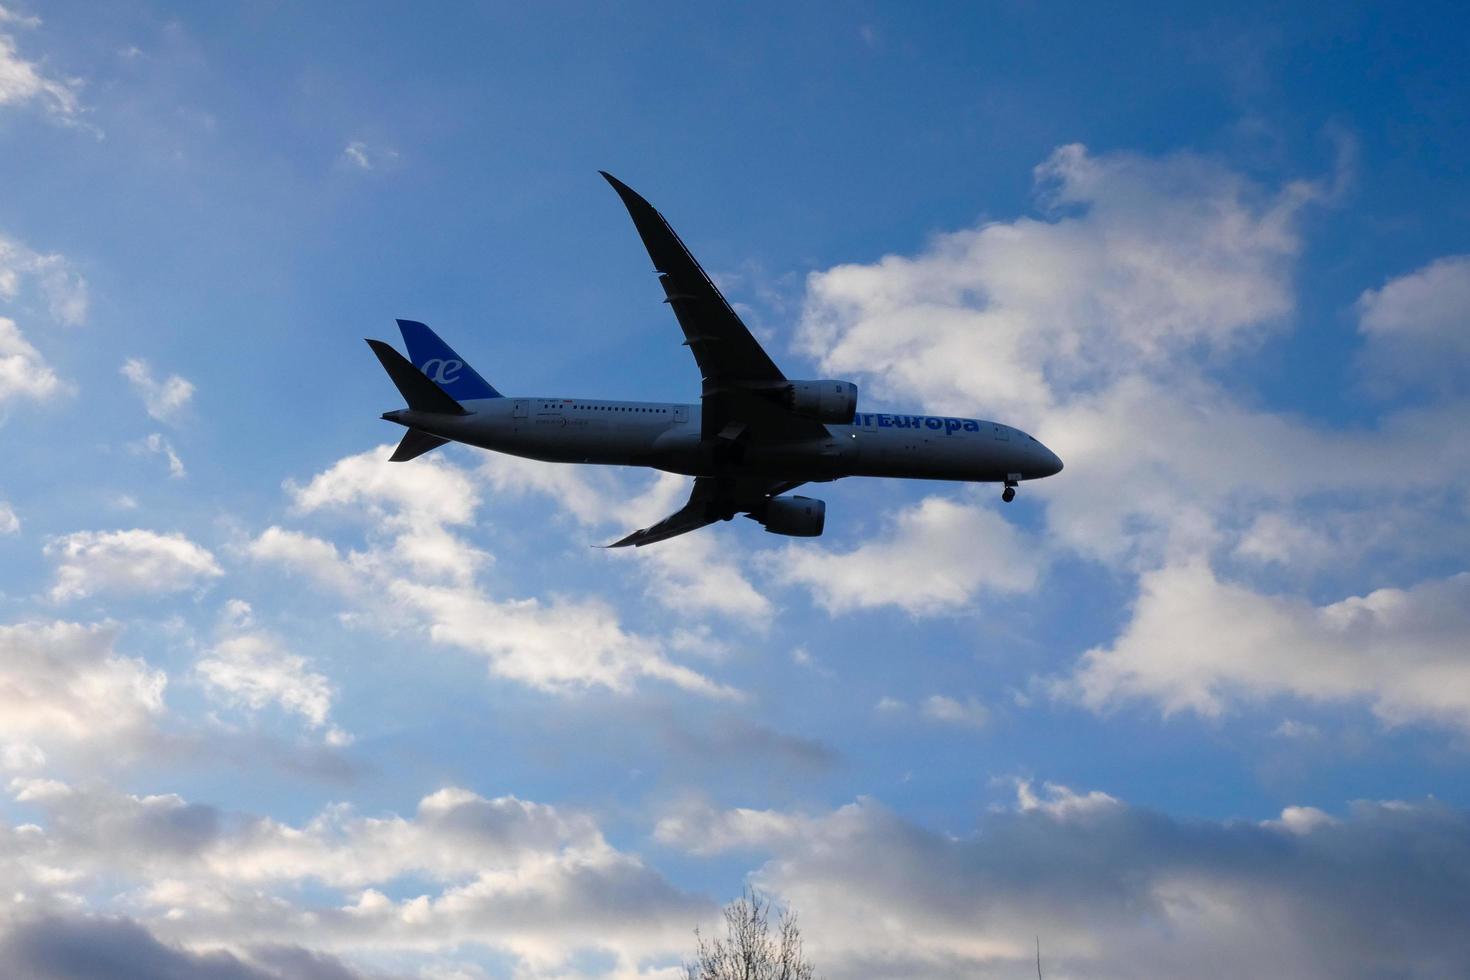 comercial aeronave sobrevoando a céu e A chegar às aeroporto foto